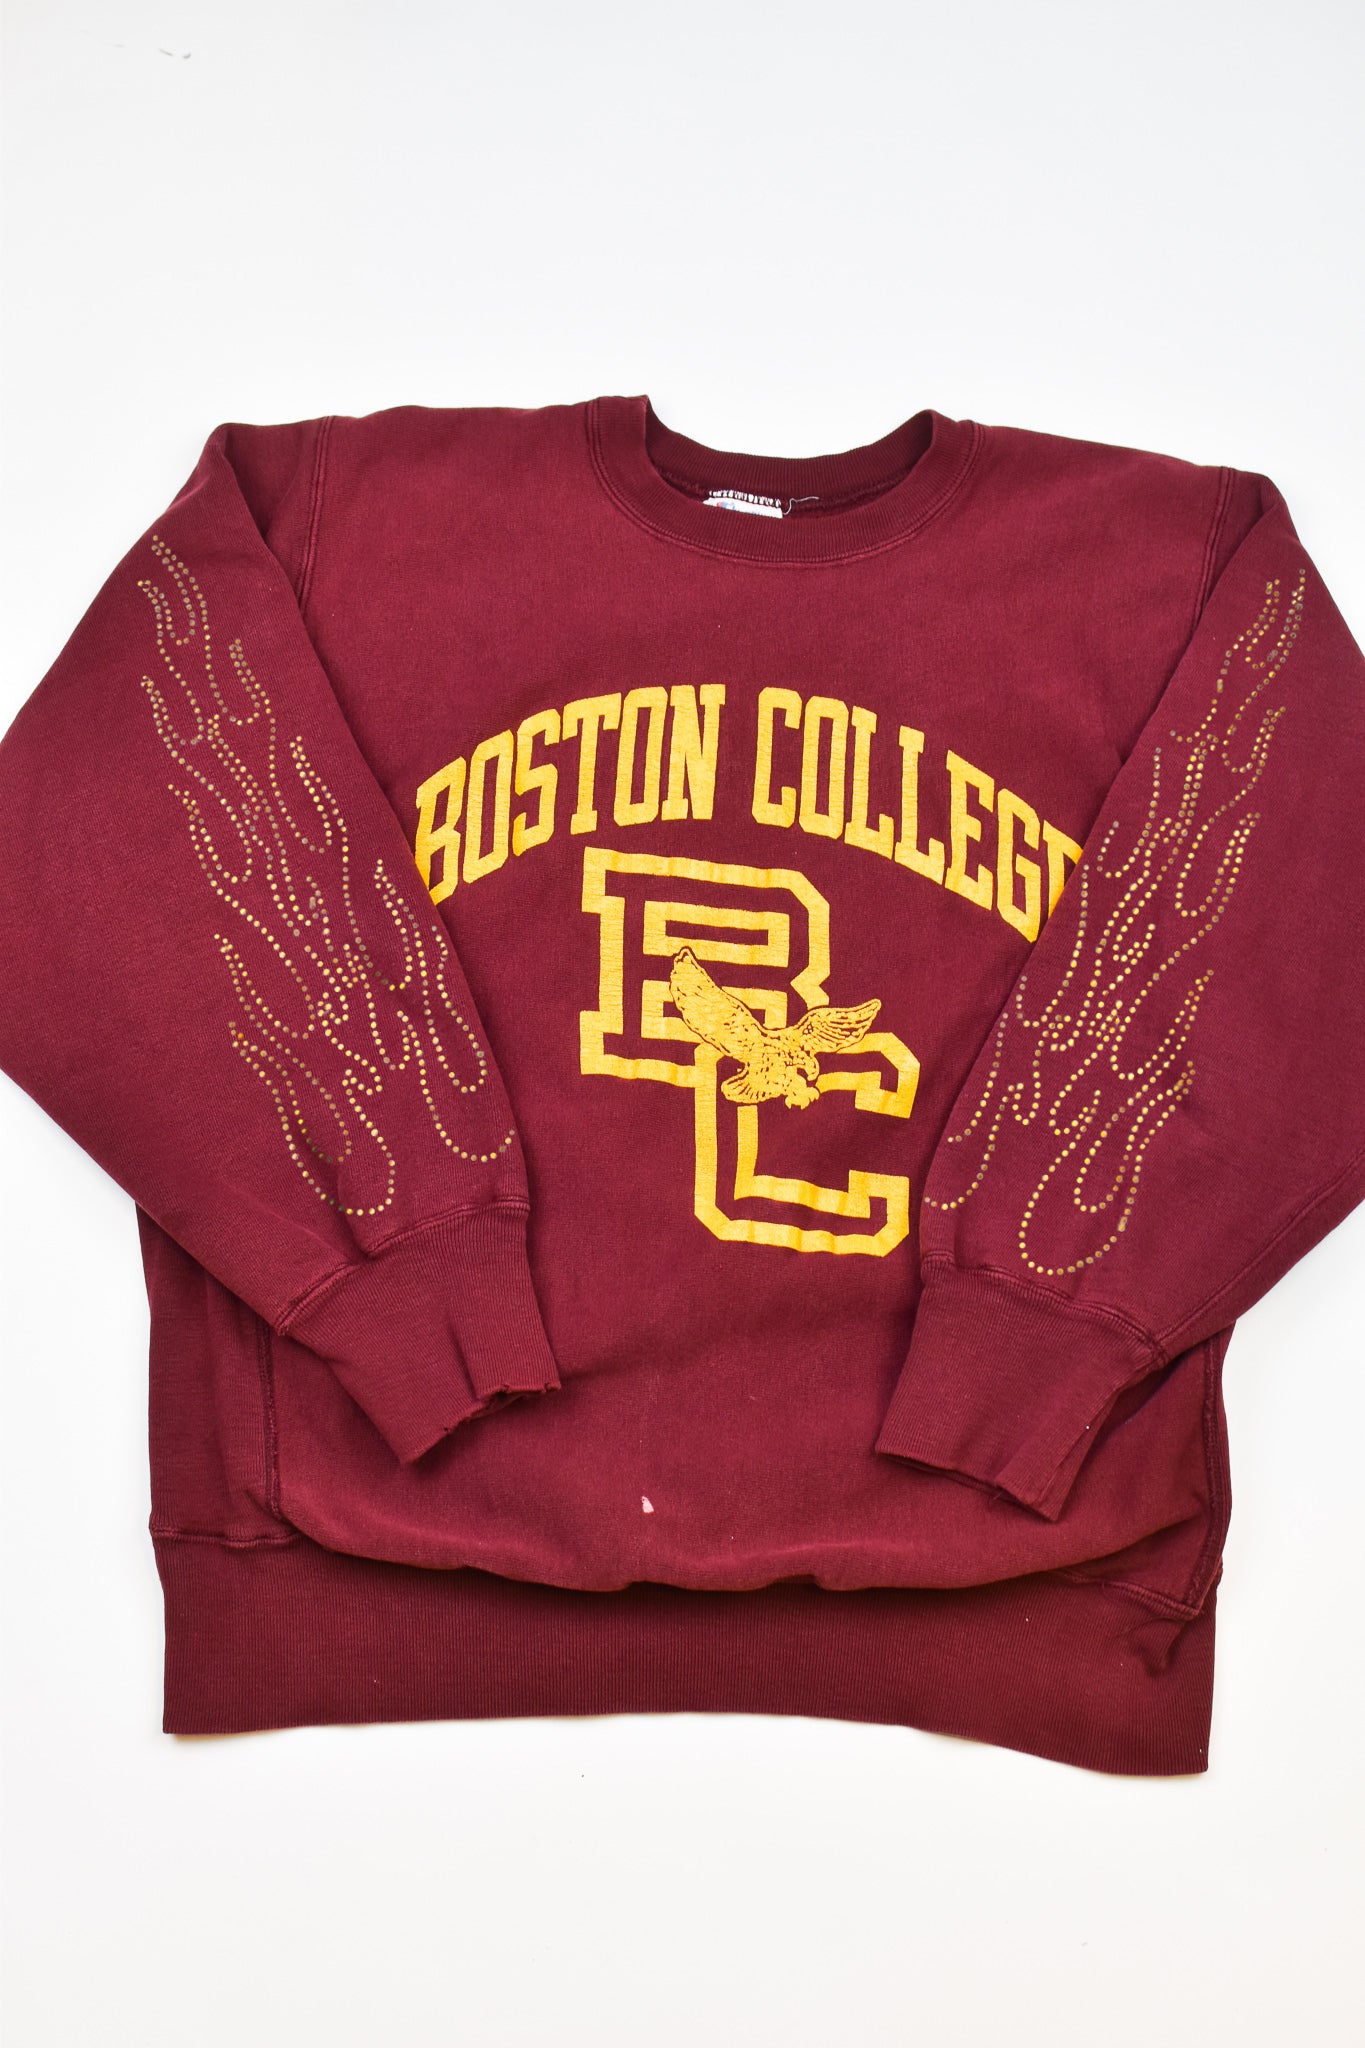 Upcycled Vintage Boston College Flame Sweatshirt